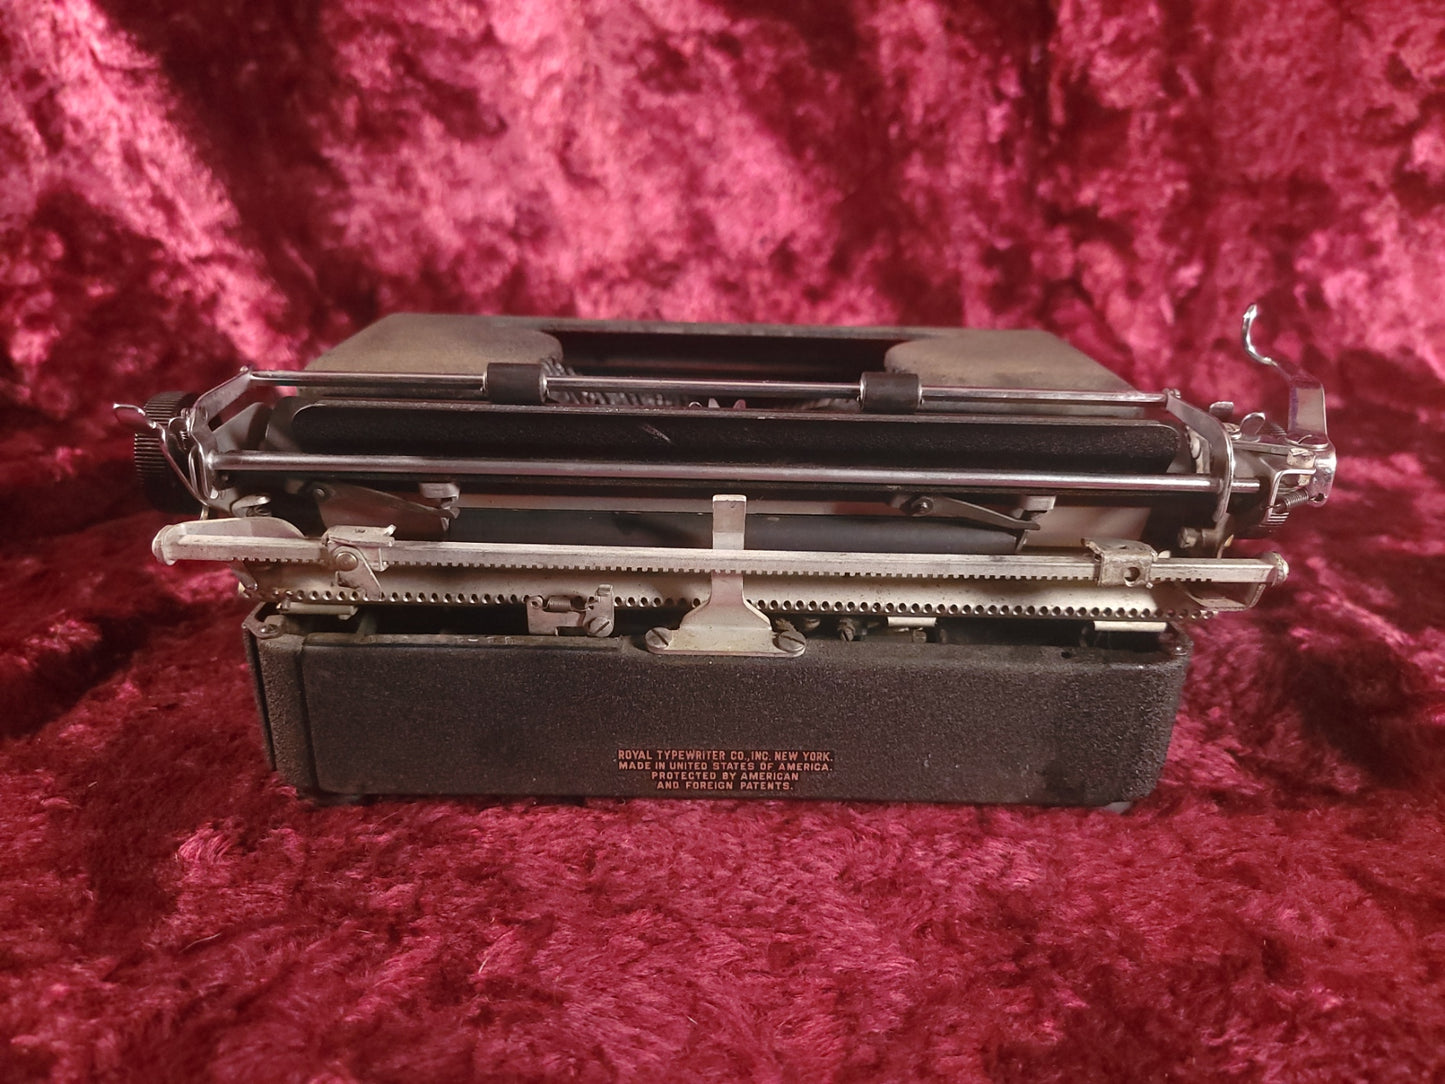 Royal Varsity UB Model Manual Portable Typewriter with Case, 1940